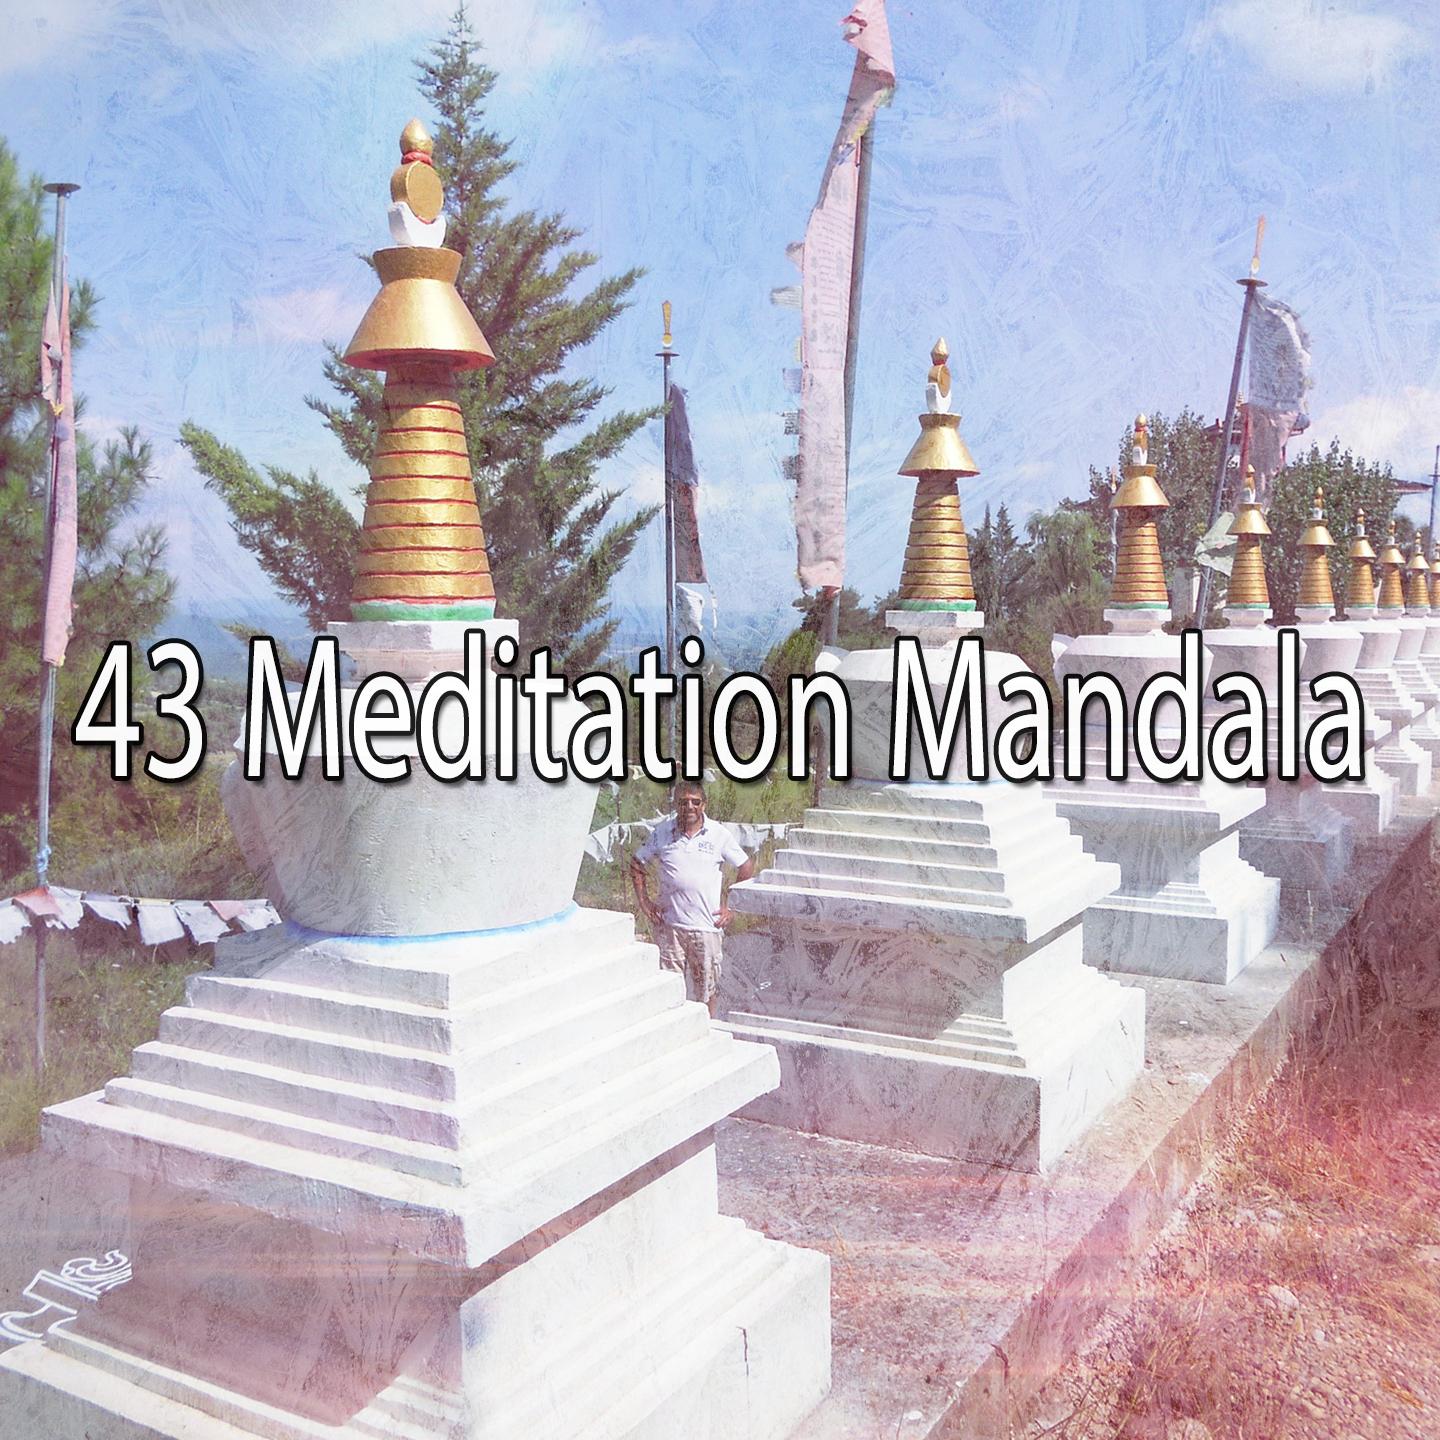 43 Meditation Mandala